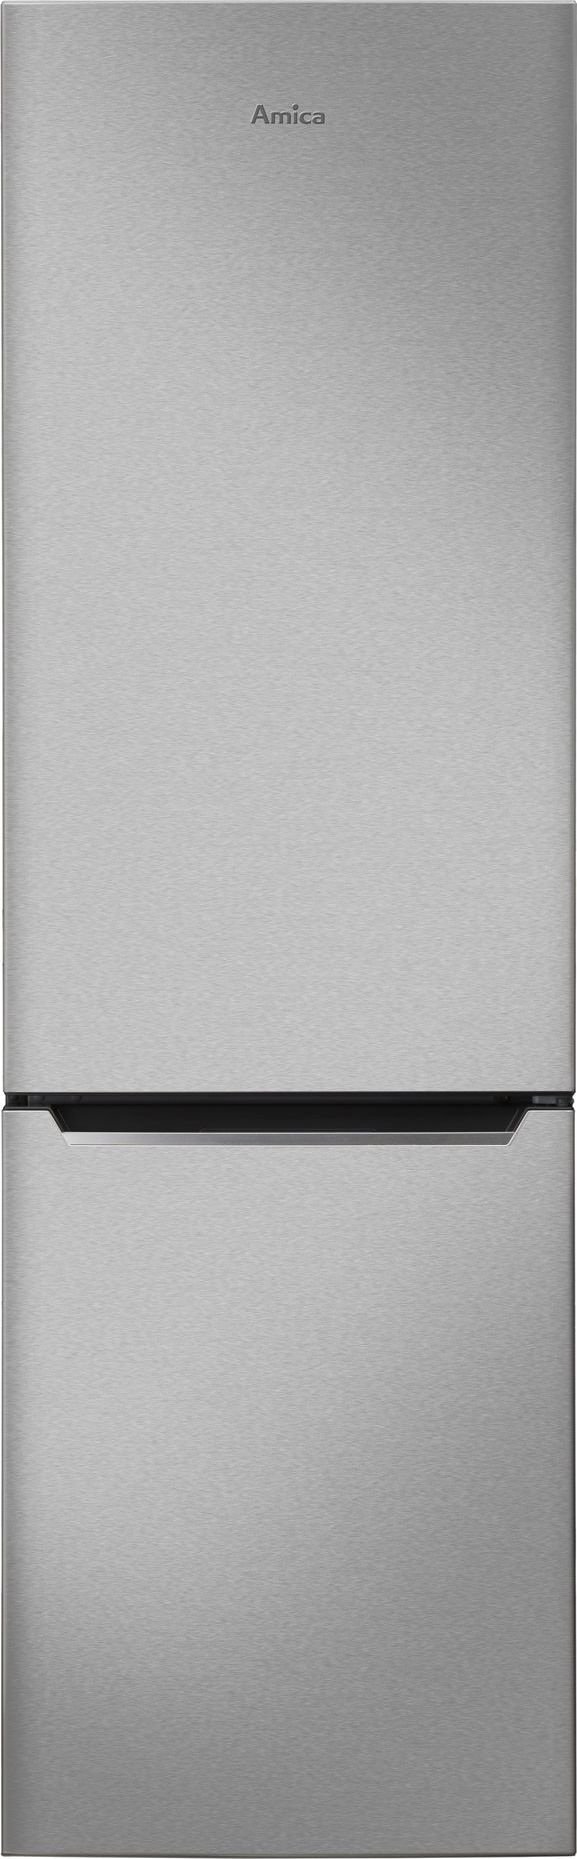 Combine frigorifice - Combina frigorifica  Amica FK2995.2FTX,
Argint,4 rafturi,
42 dB,
Fara display